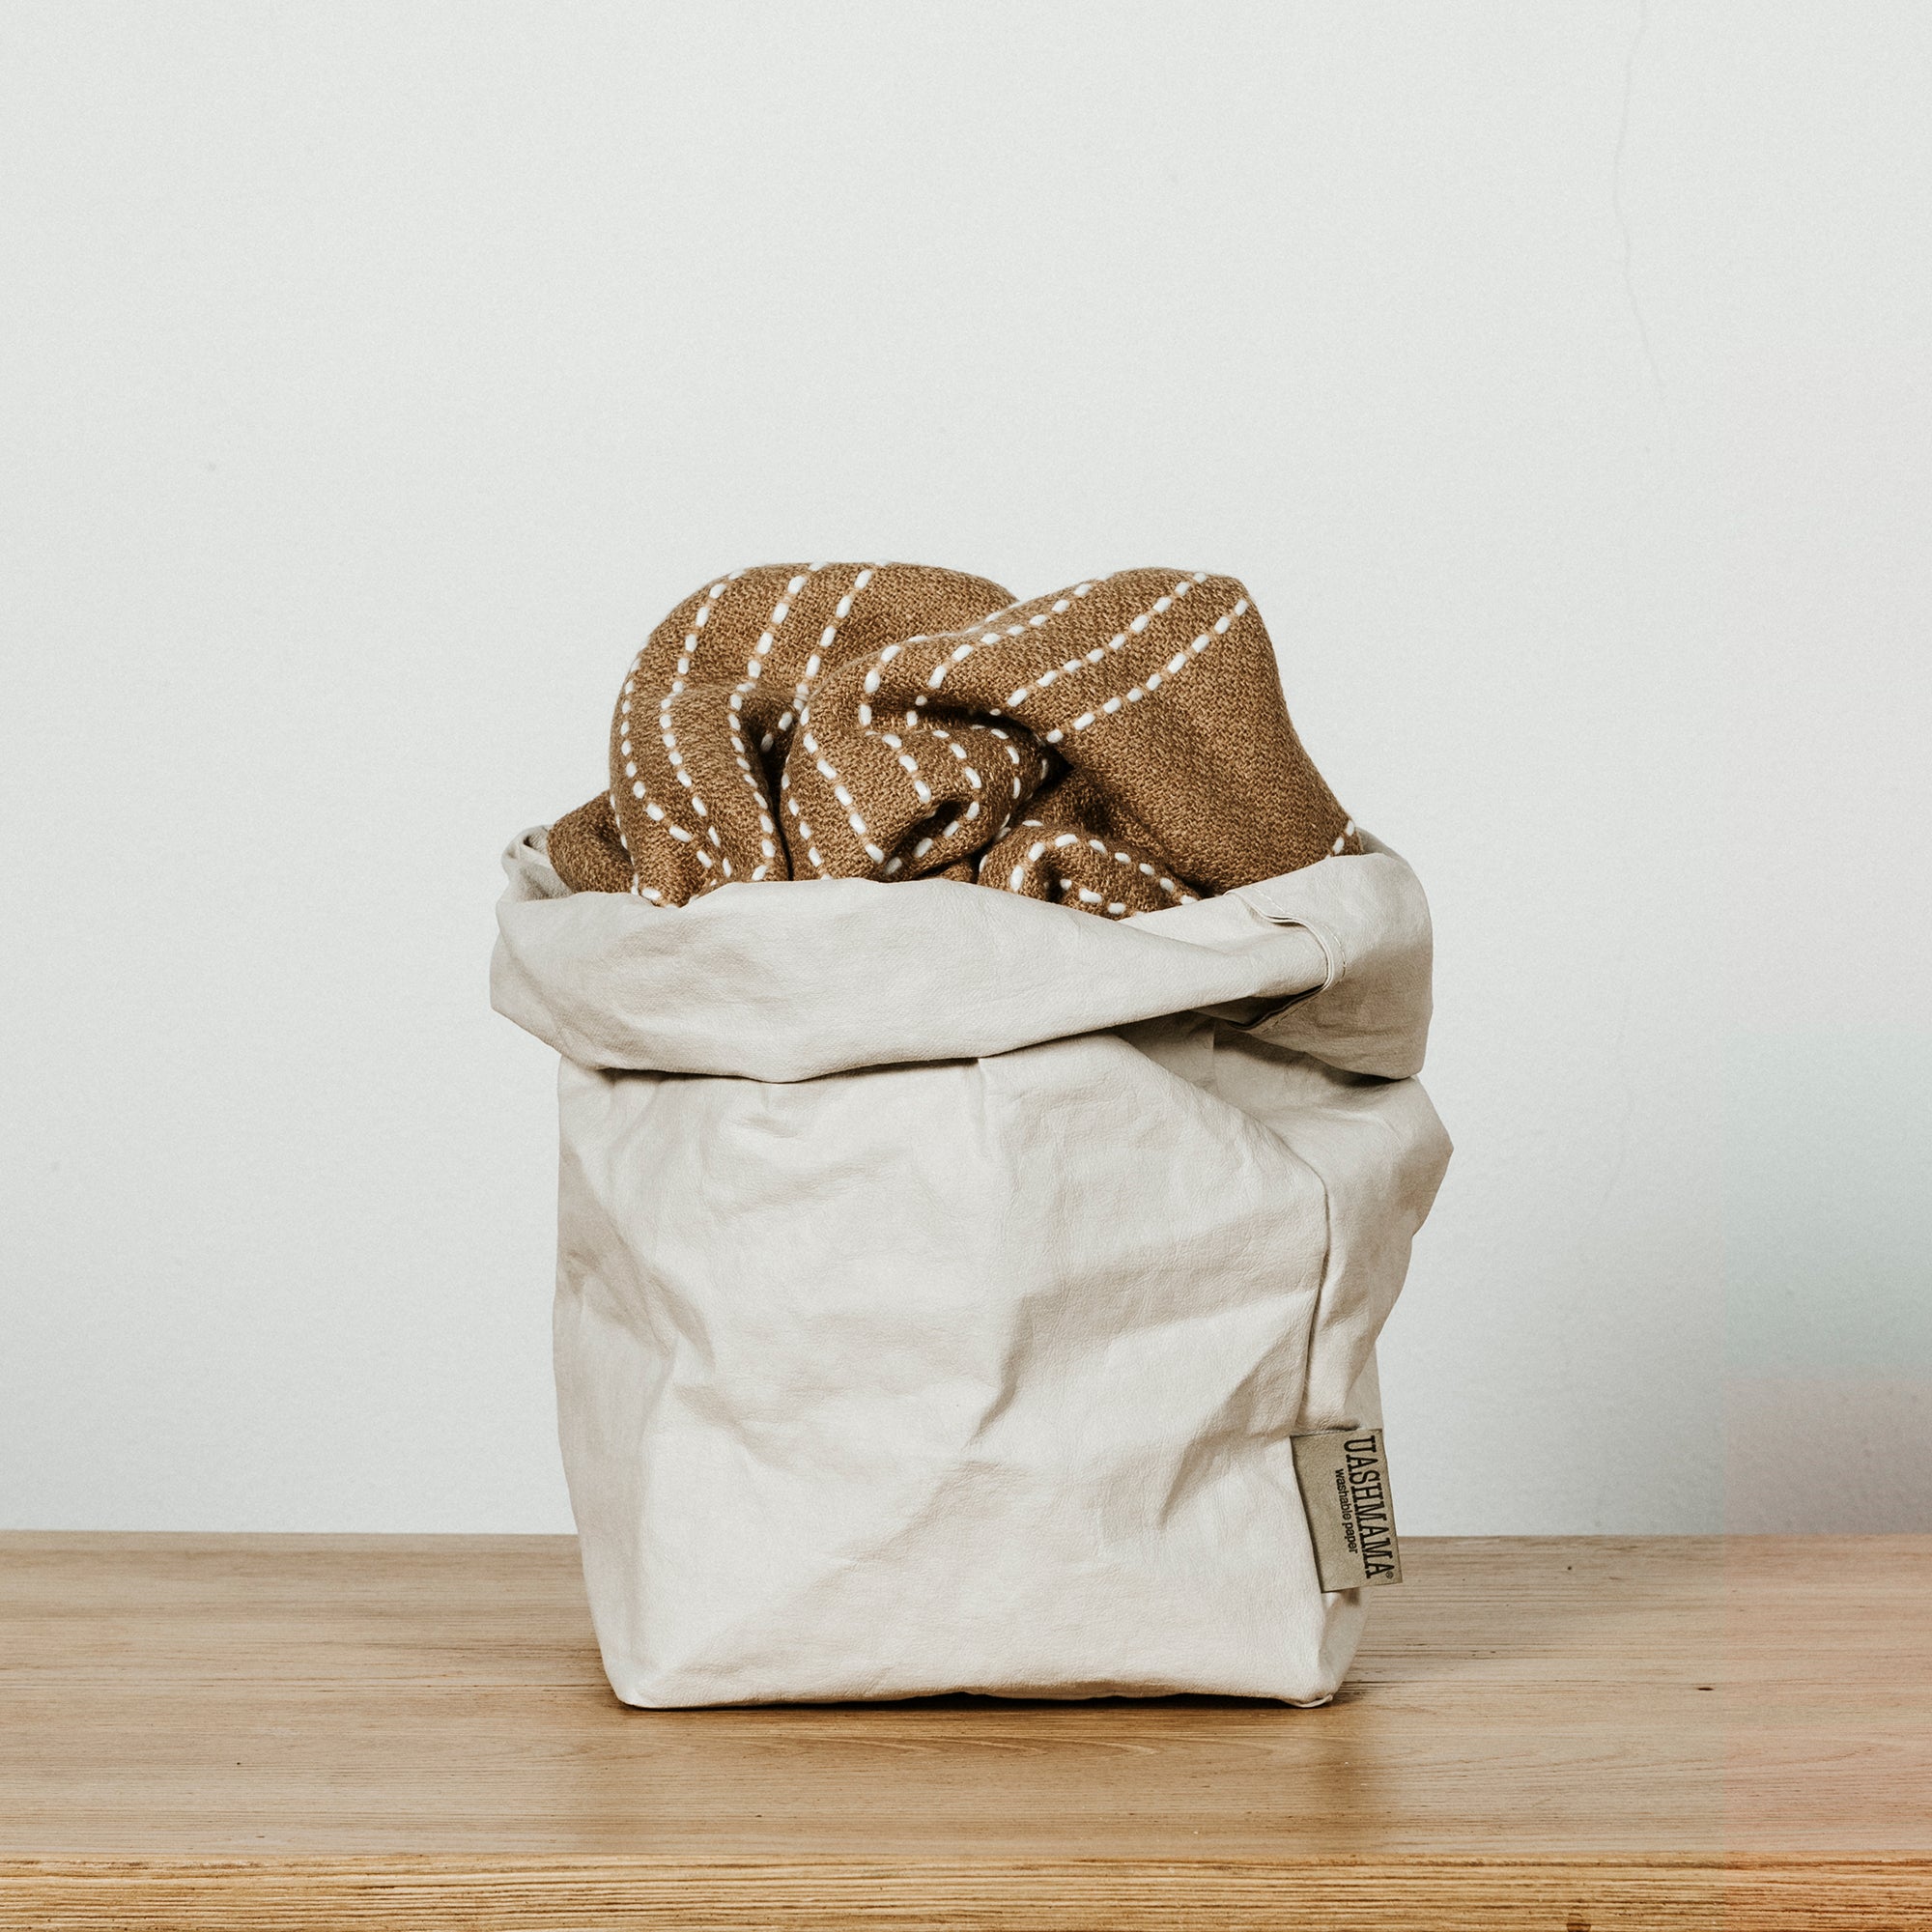 Uashmama Paper Bag, Planter, Fruit Basket, Storage